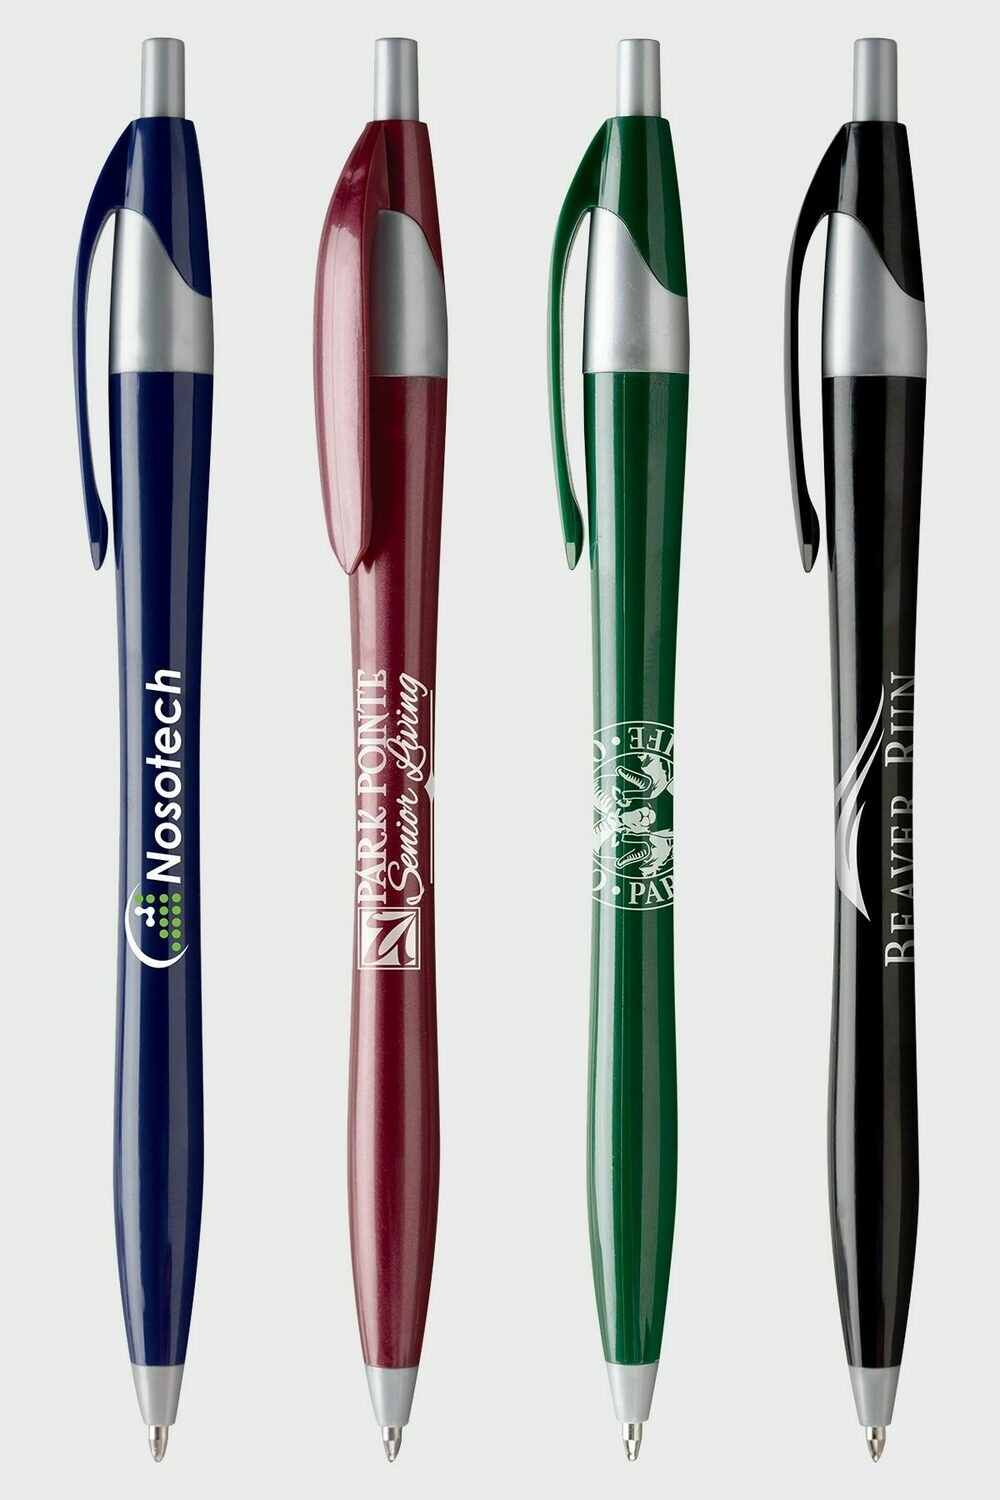 Javalina Corporate Pens